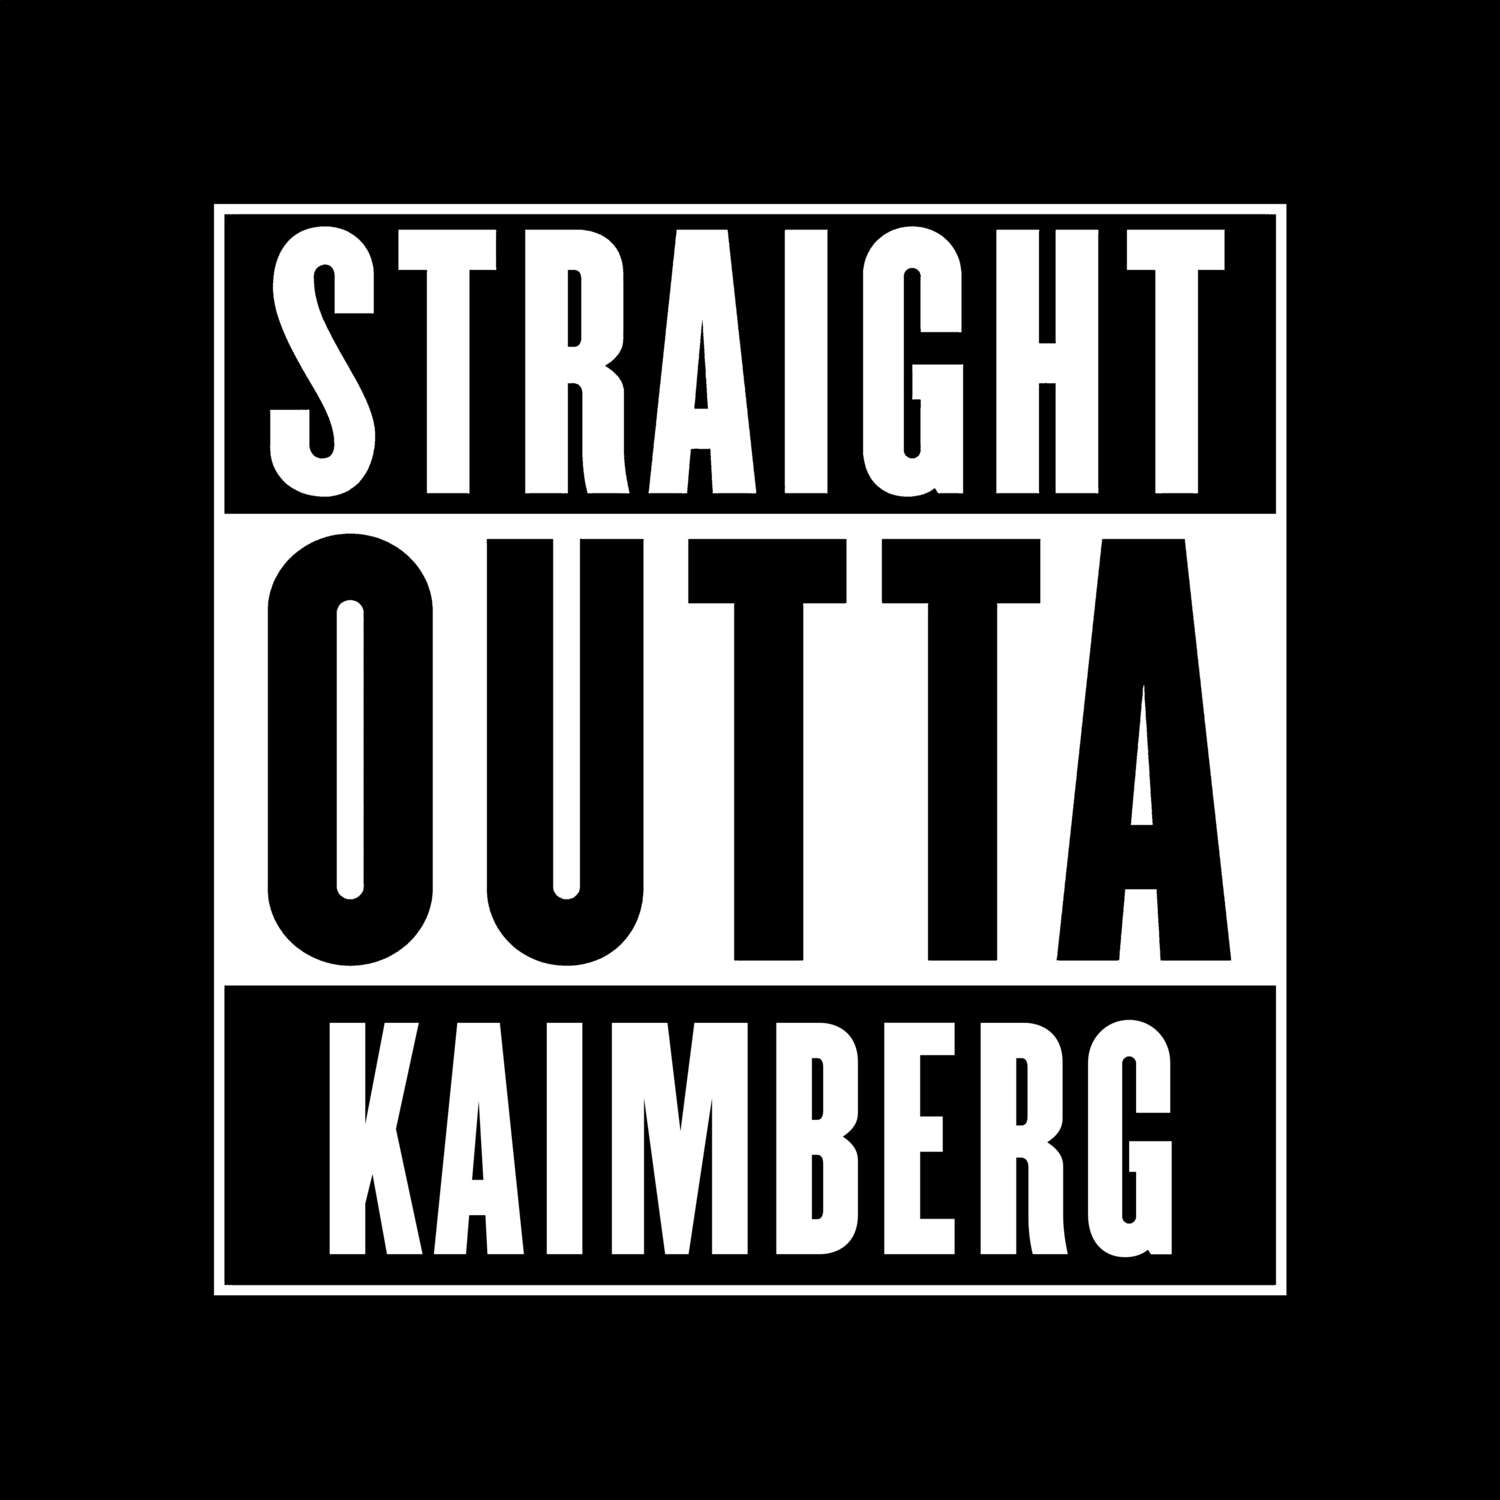 Kaimberg T-Shirt »Straight Outta«